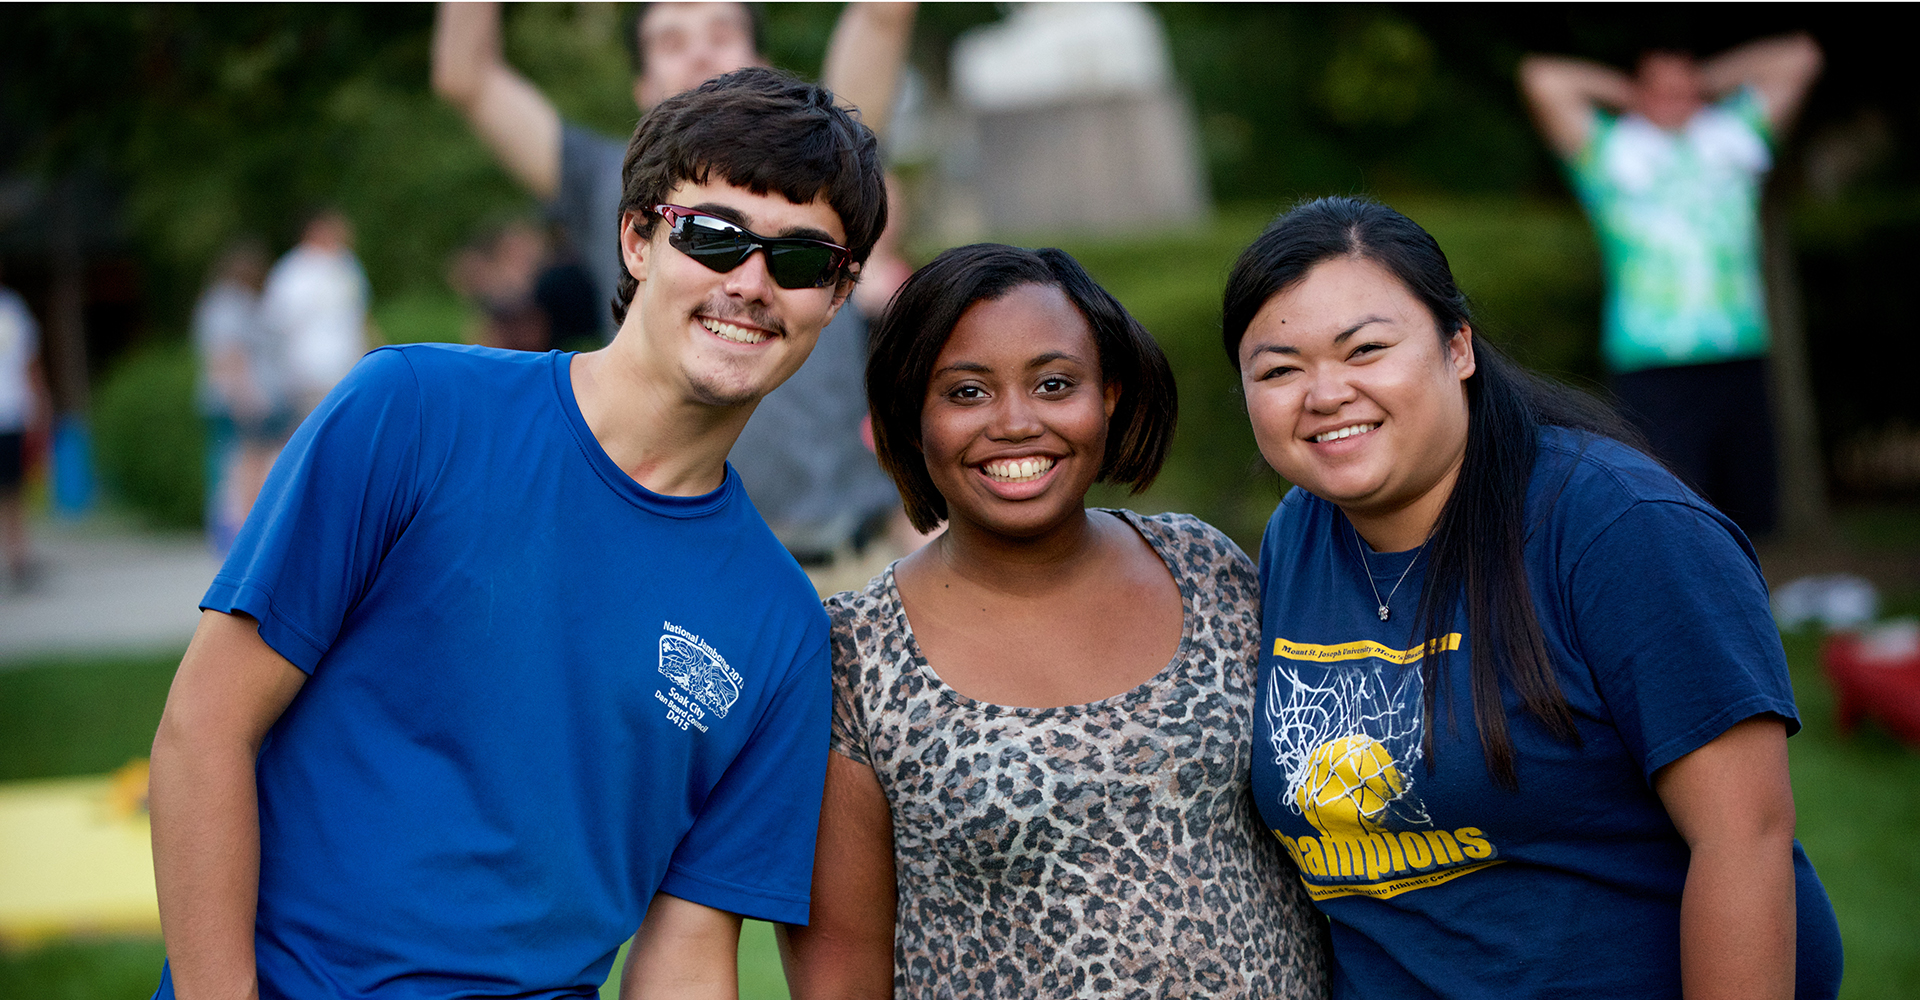 diverse students smiling in Mount St. Joseph University quad